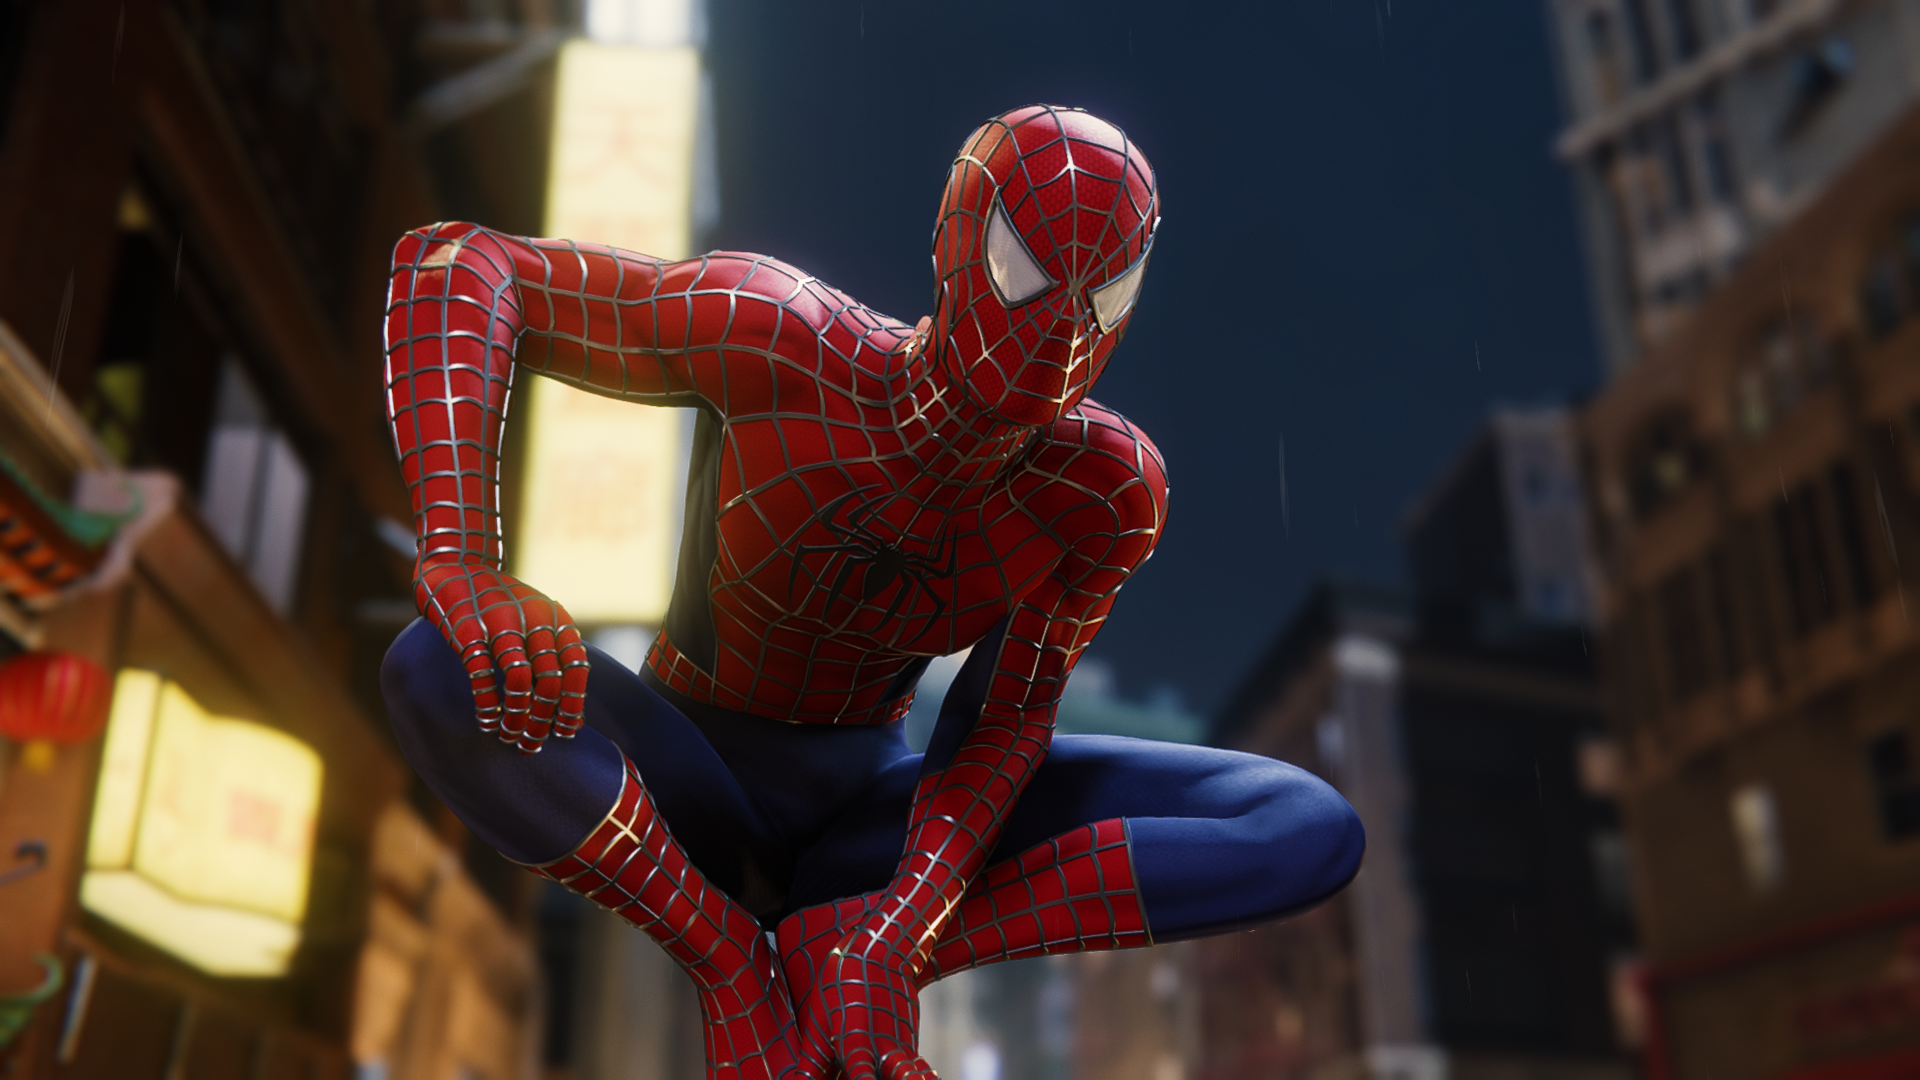 General 1920x1080 Spider-Man Remastered video games superhero CGI